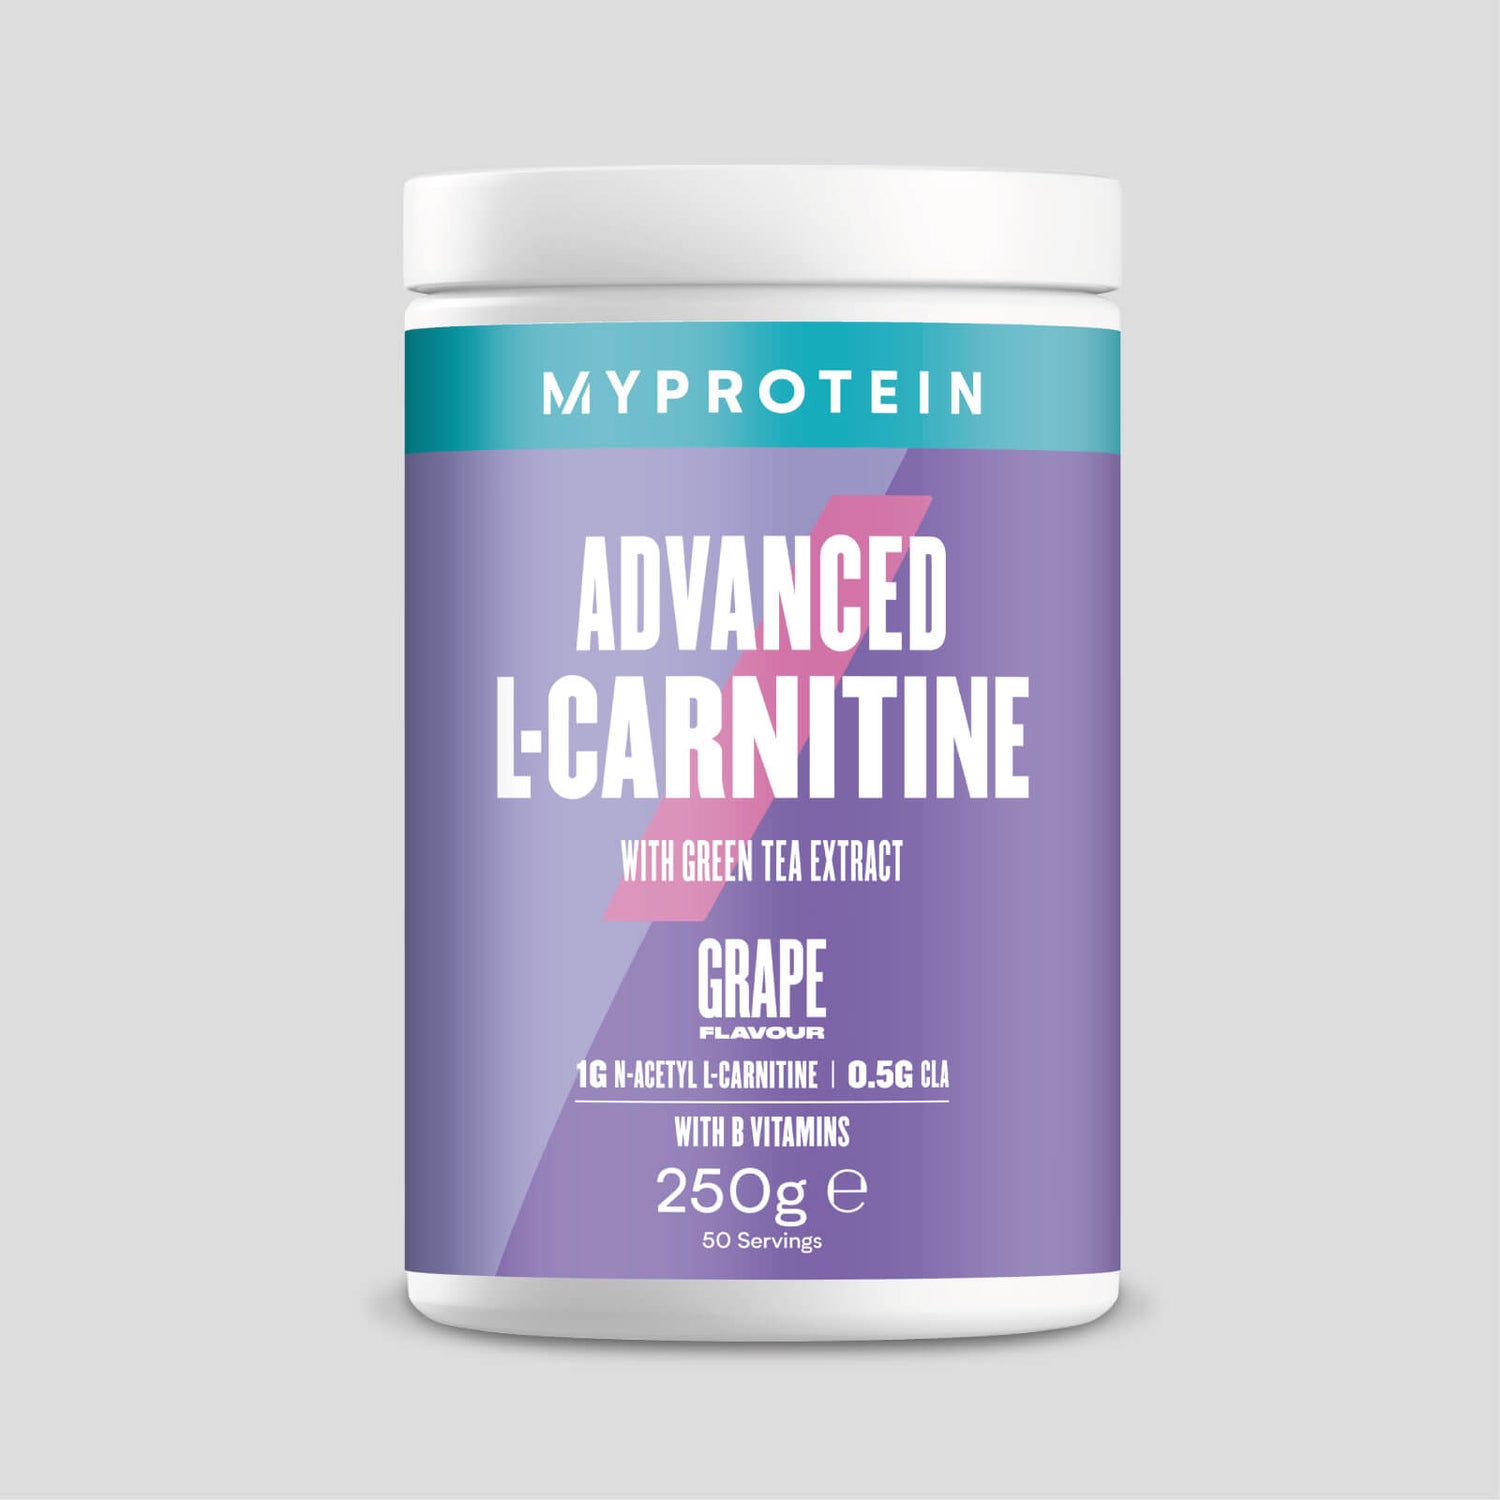 Myprotein Advanced Carnitine - 50servings - Grape